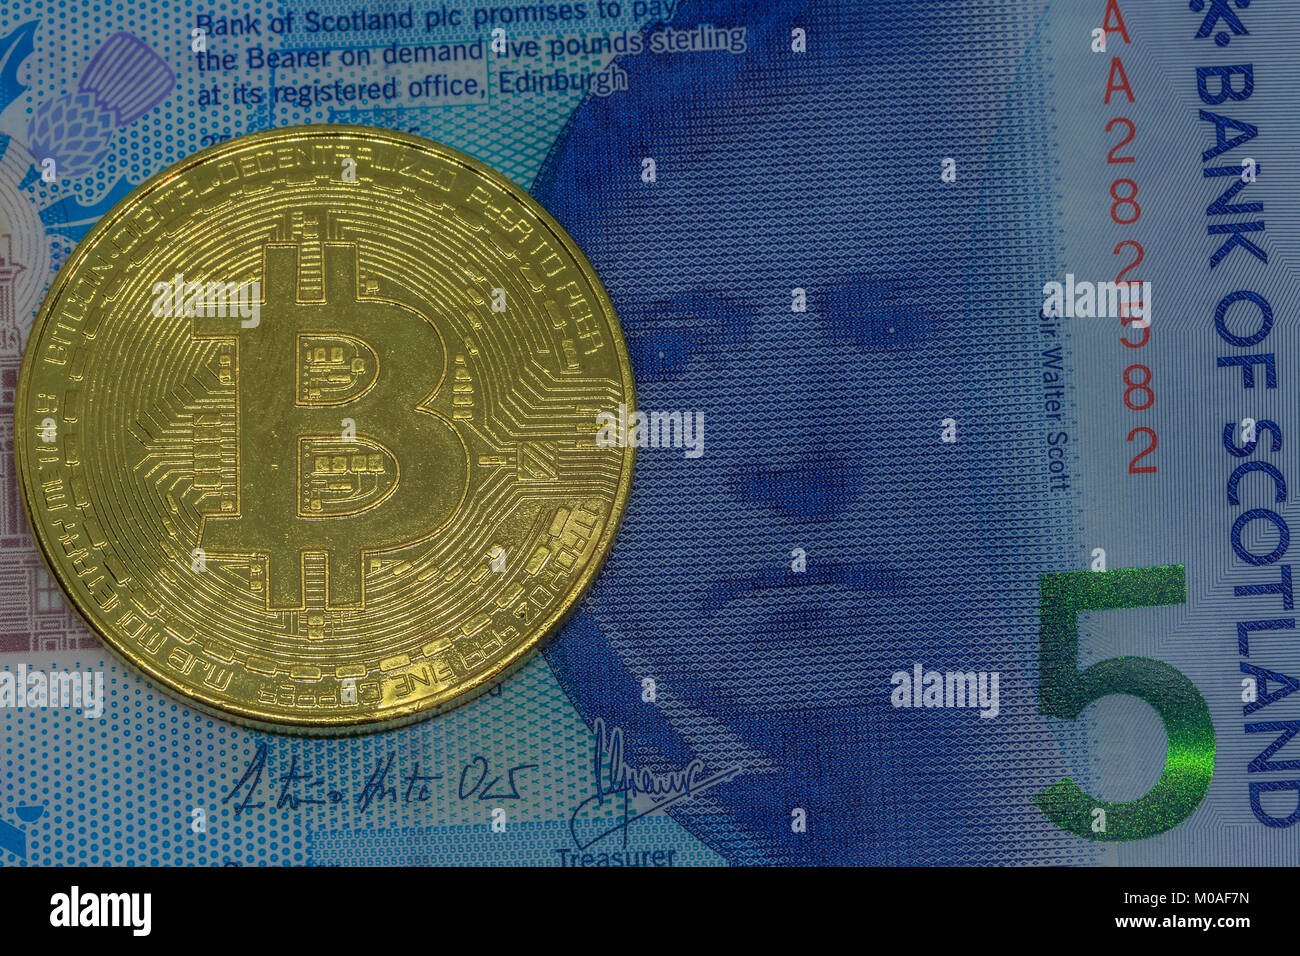 Bitcoin on Scottish 5 pound banknote Stock Photo